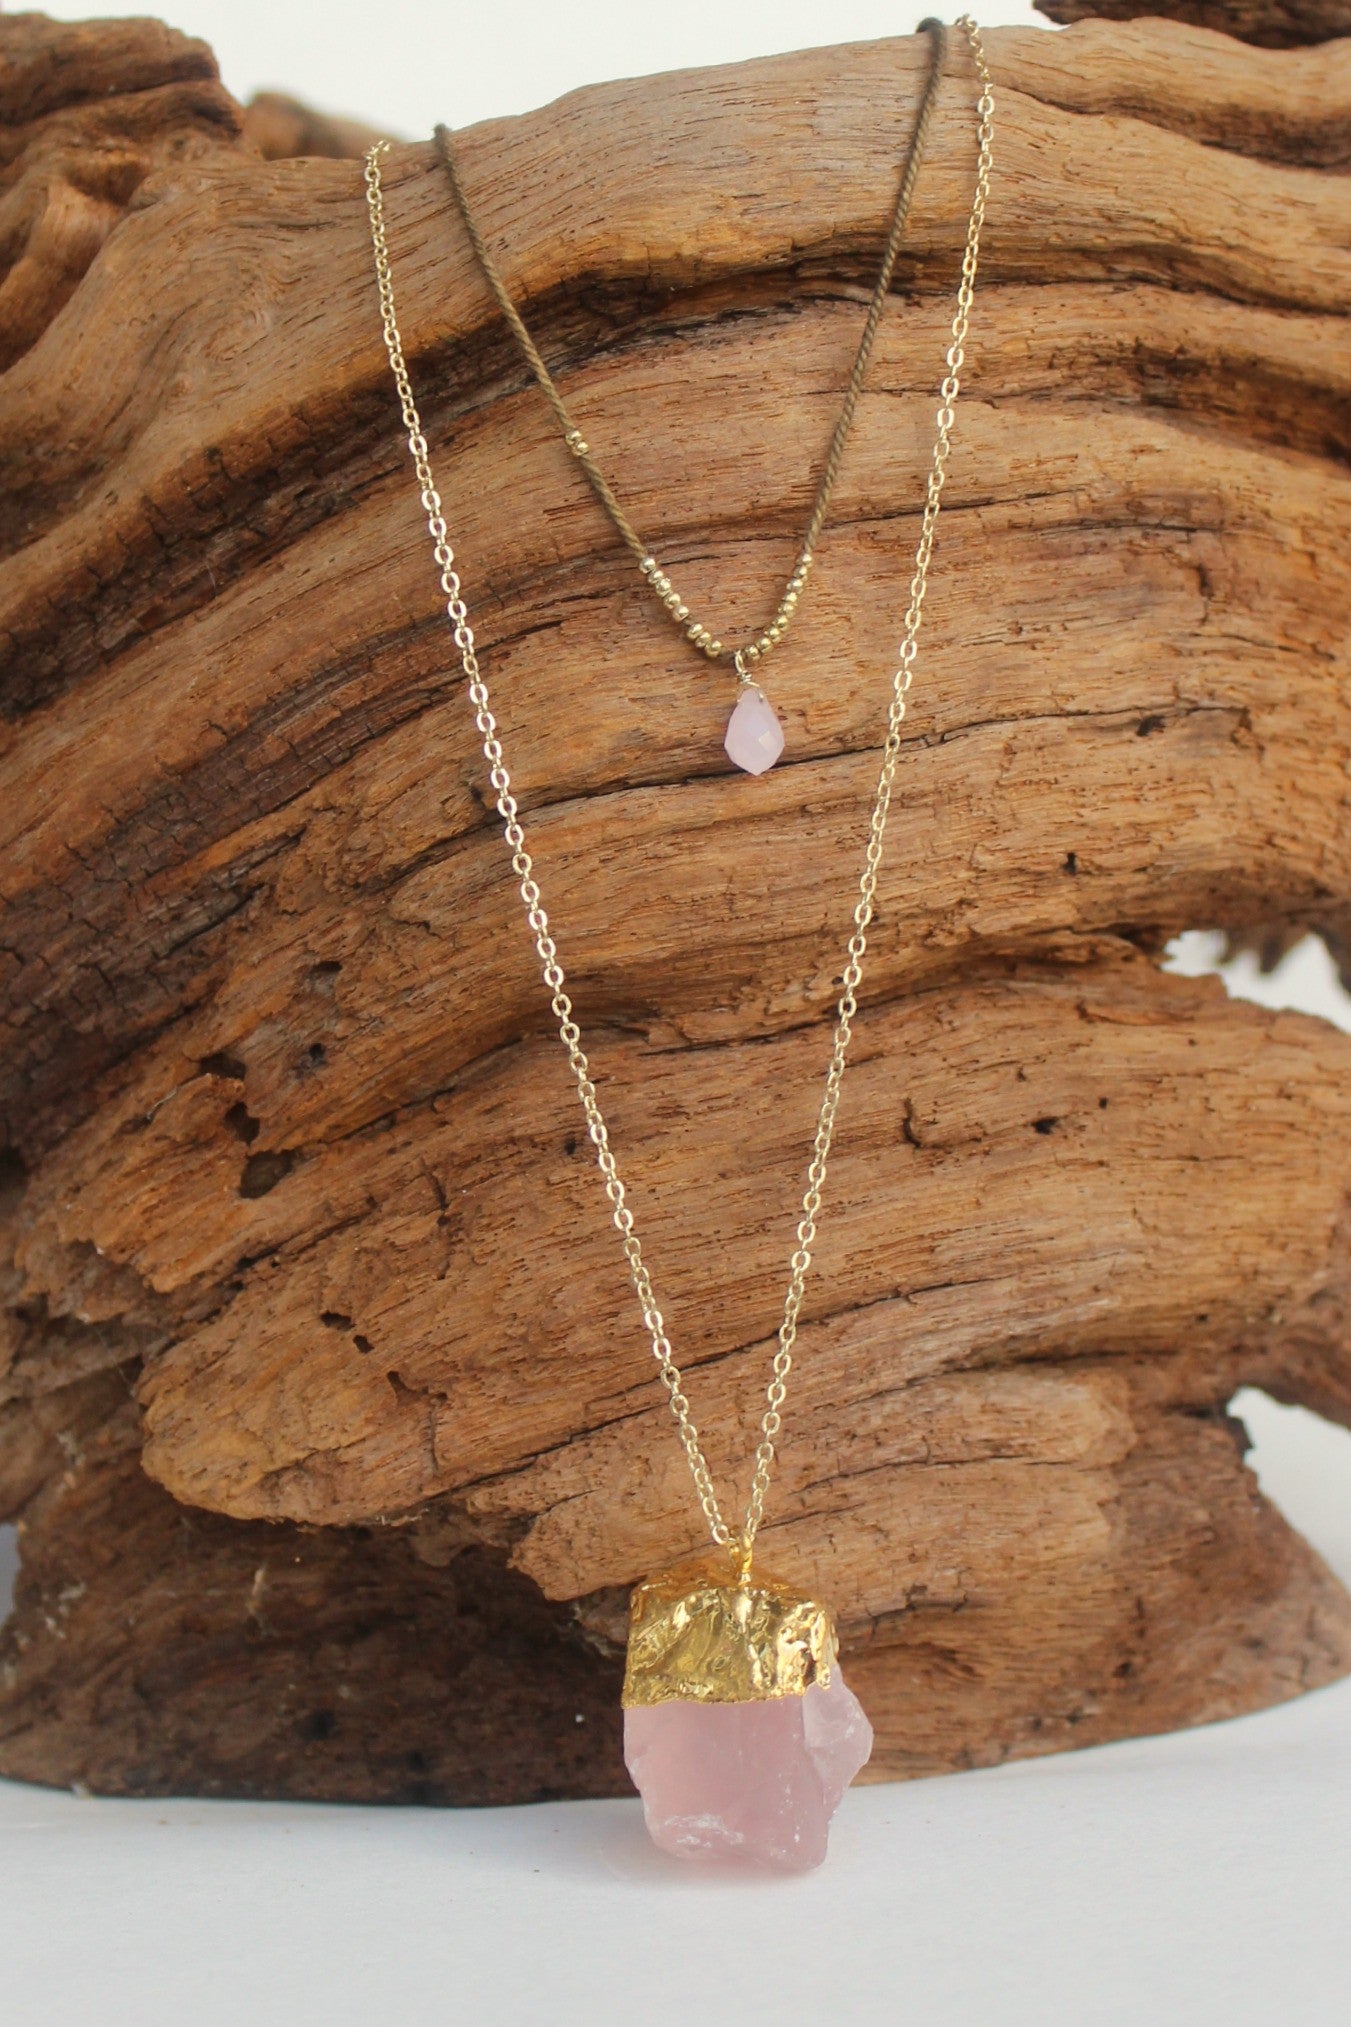 Layered Rose Quartz Pendant Necklace, Pink